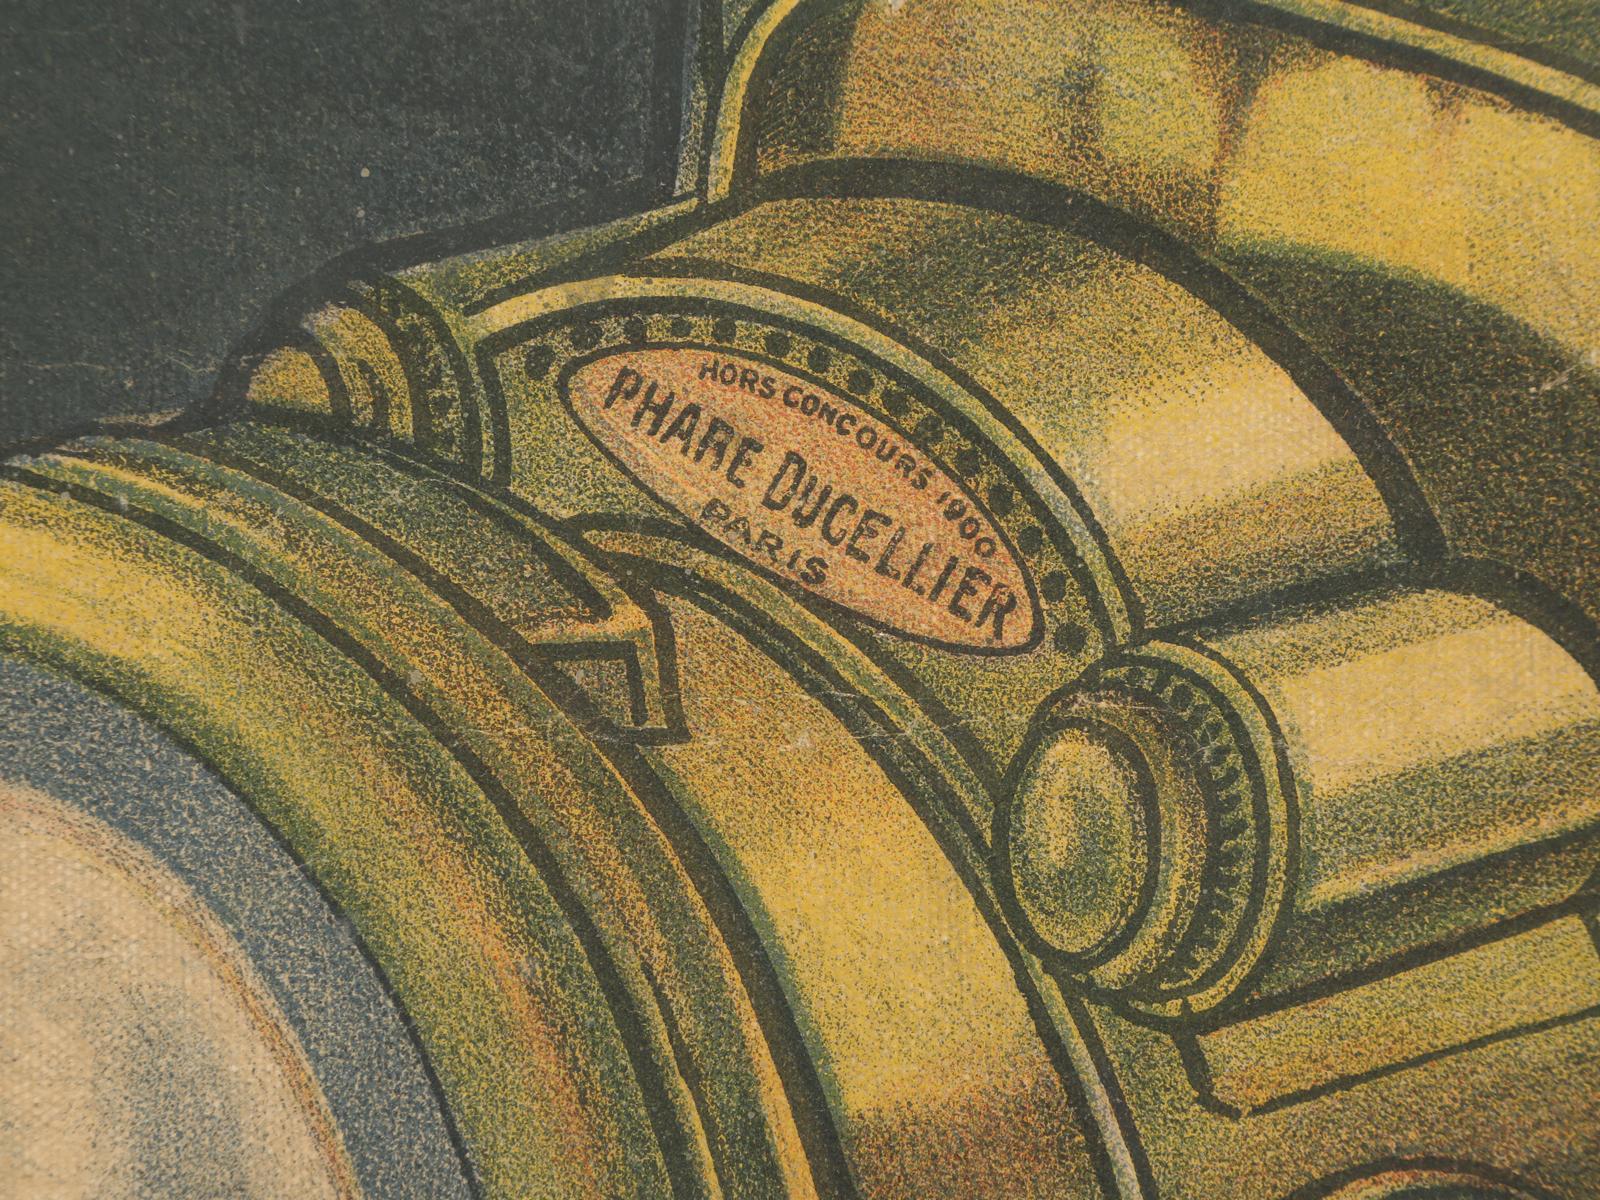 Phares Ducellier Large Original Poster by P. Chappelier, Paris France, 1900 For Sale 5